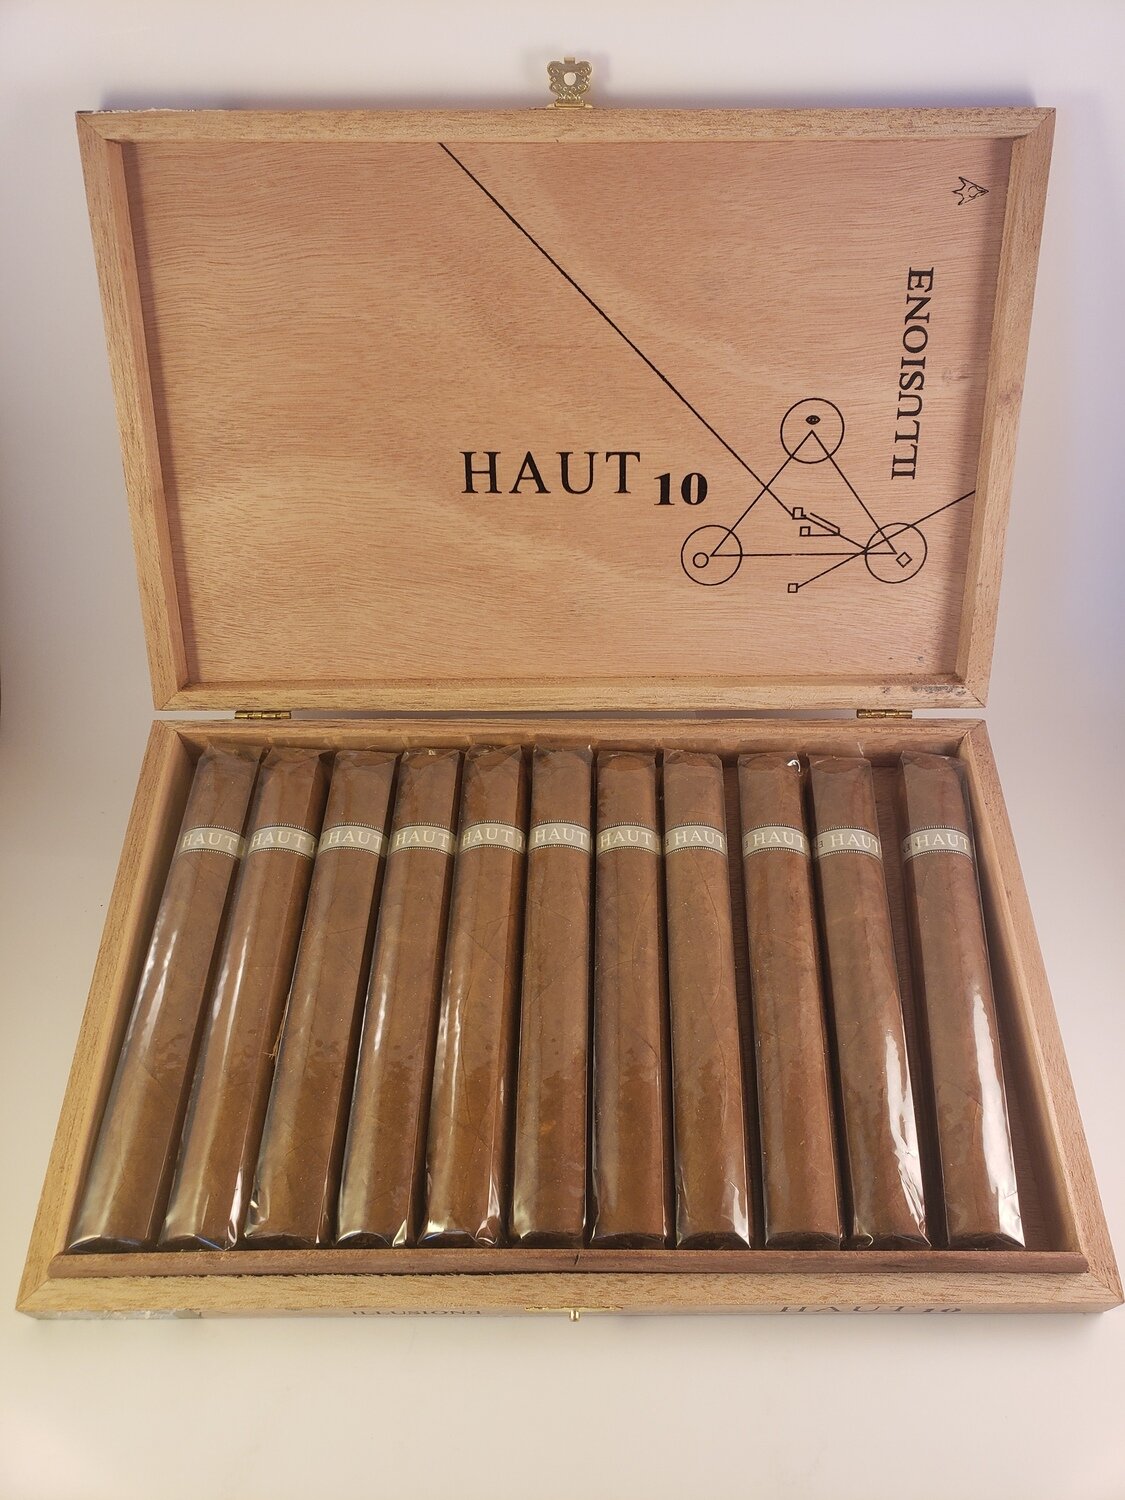 Illusione Haut 10 Toro 5 1/2 x 52 Single Cigar